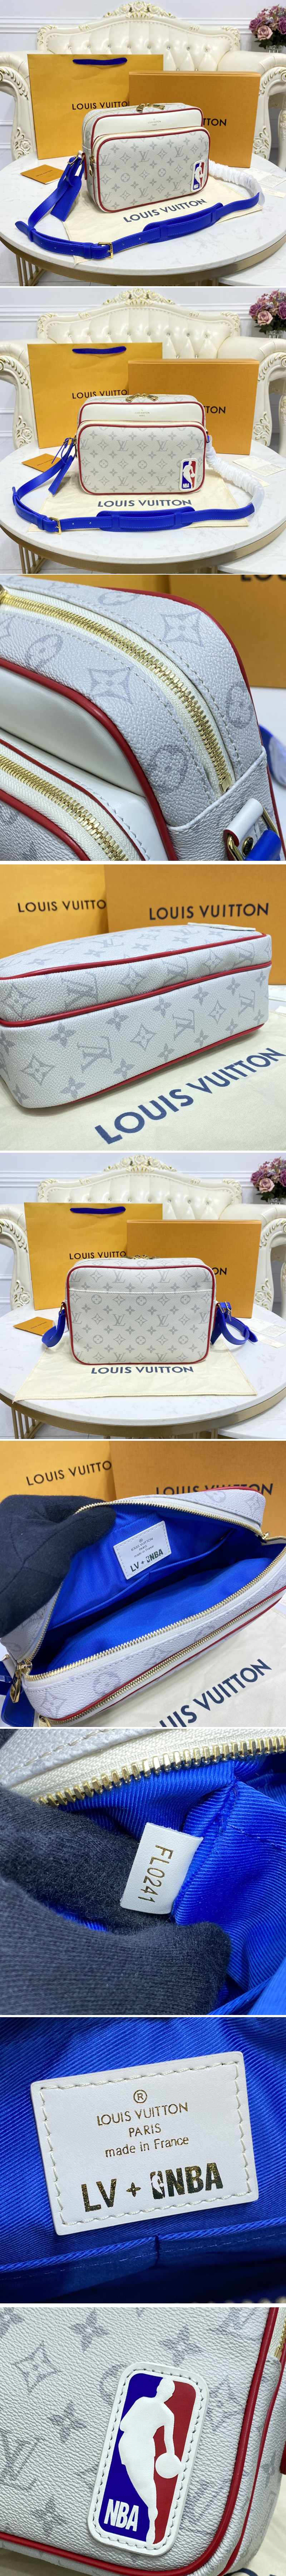 Louis Vuitton M45583 LV LVxNBA Nil Messenger bag in Monogram